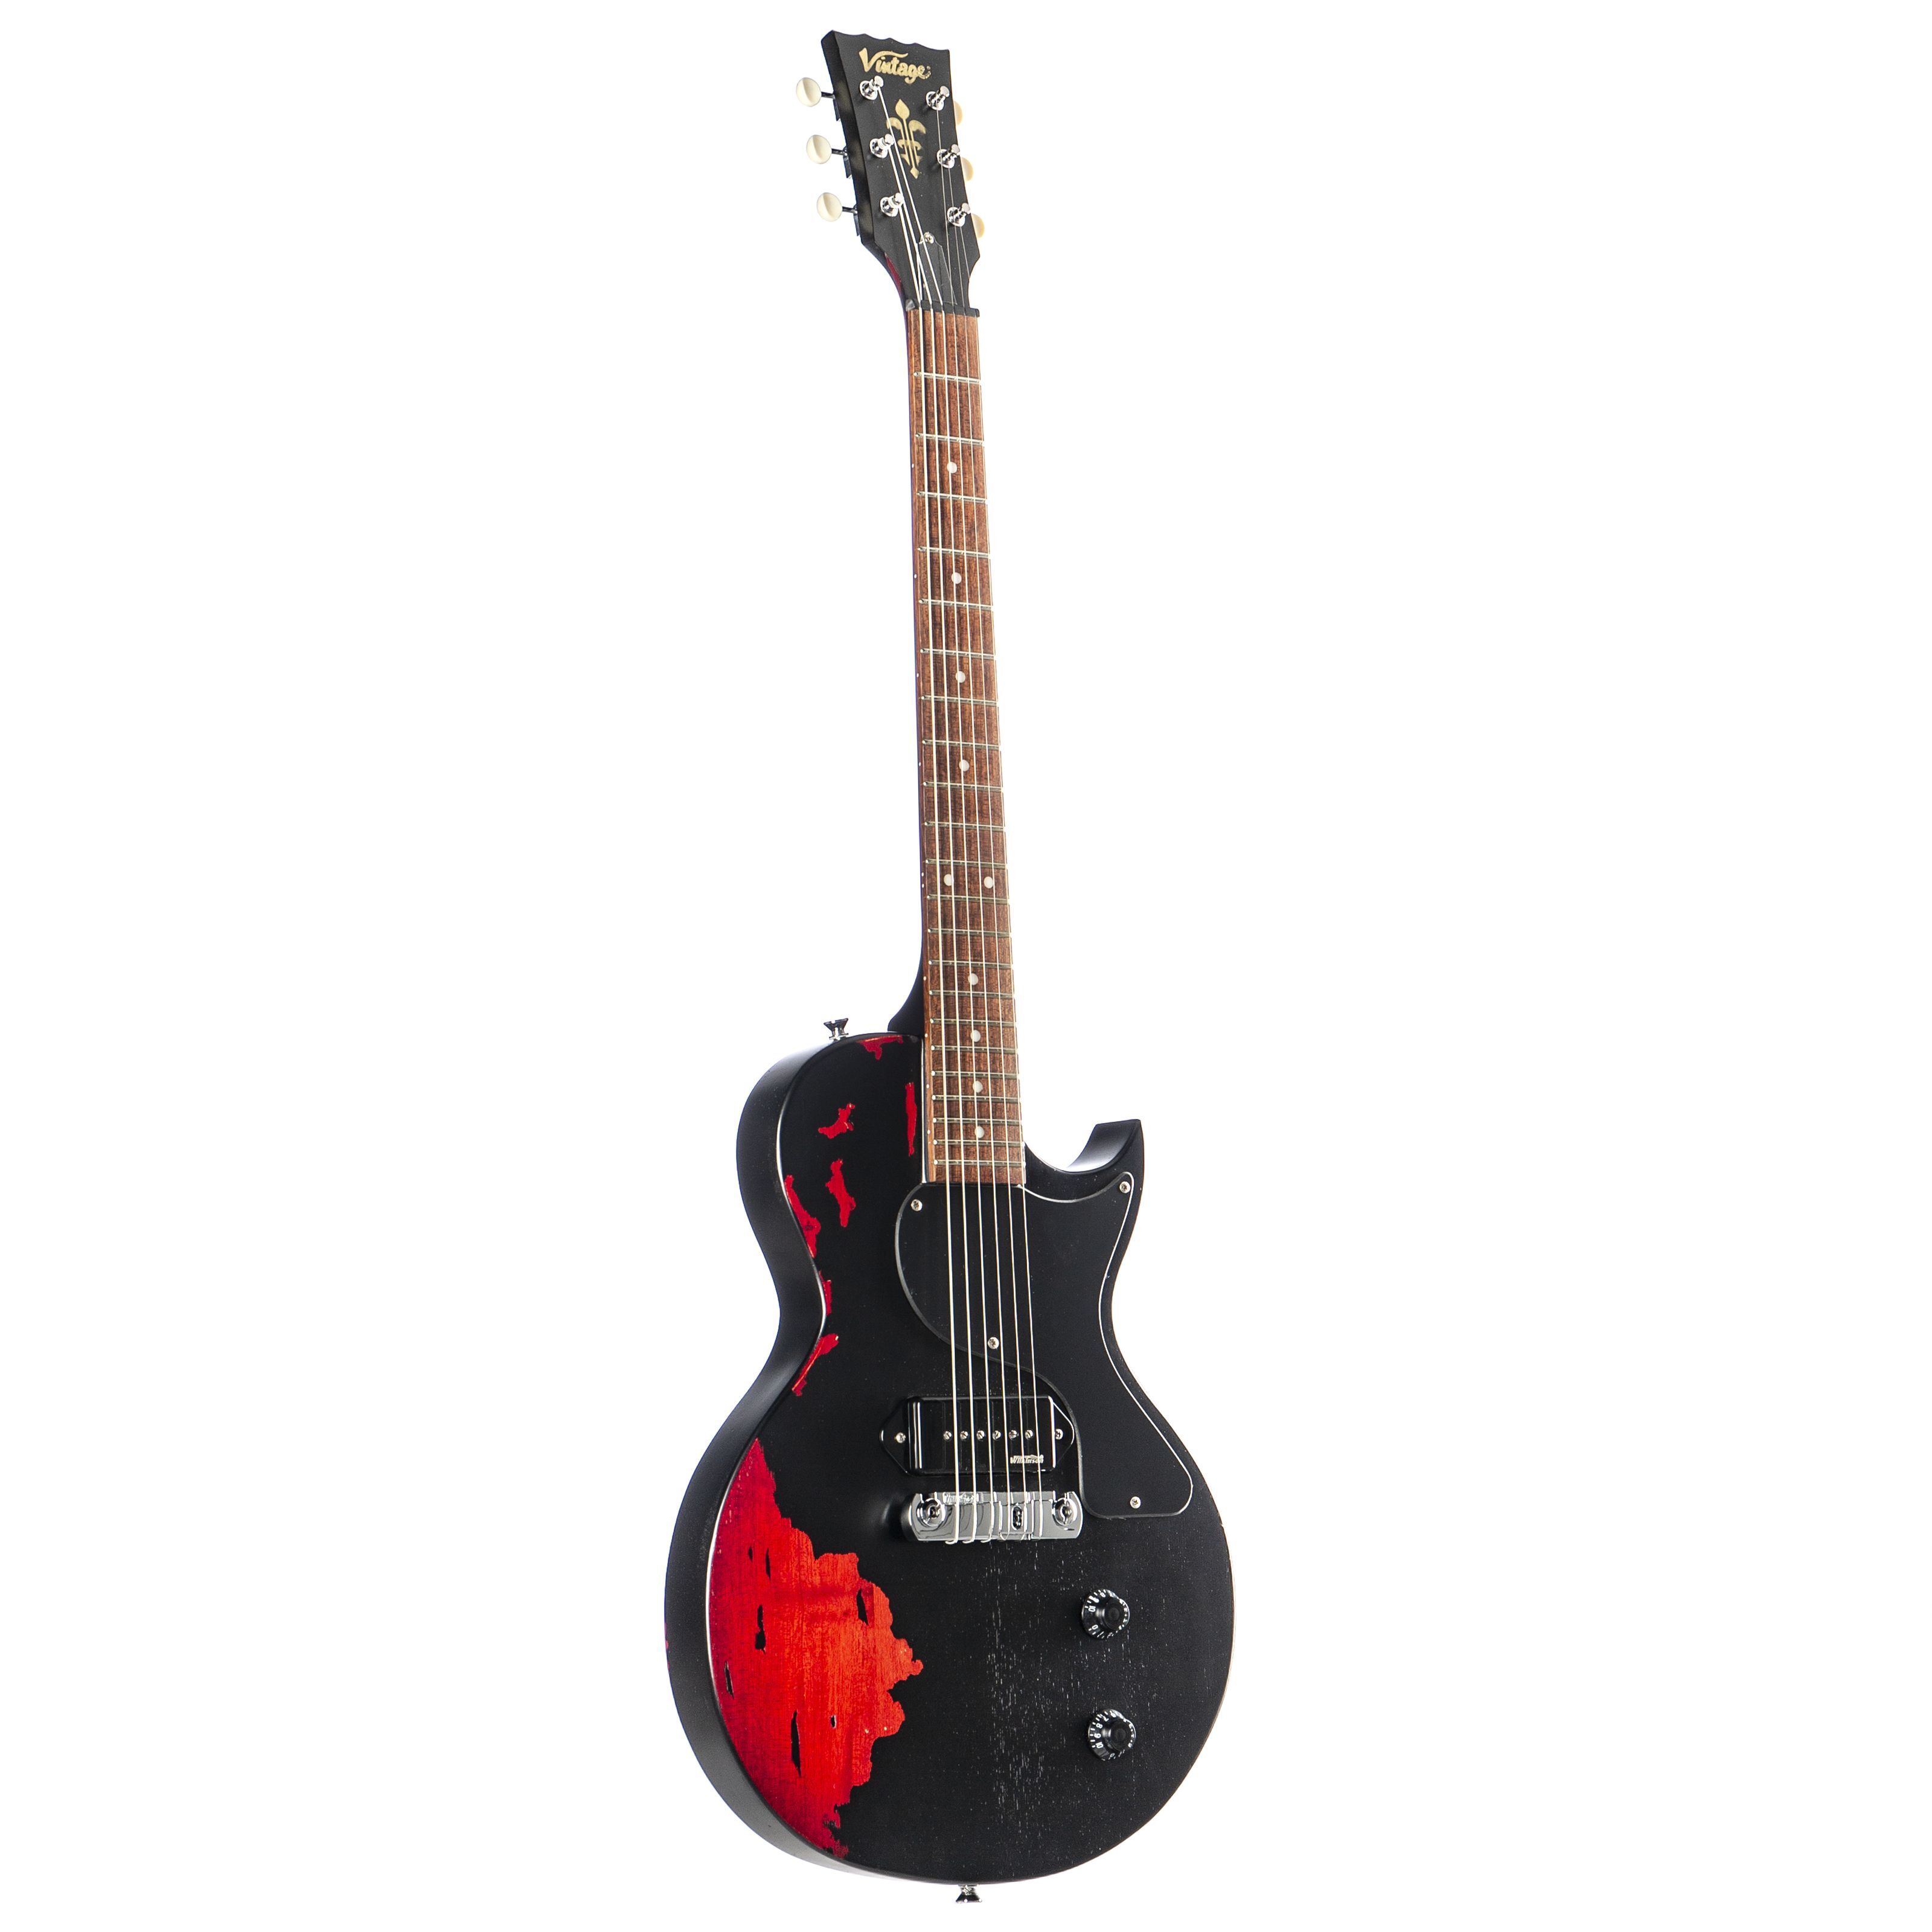 Vintage Icon V120MRBK Distressed Black over Red - Single Cut E-Gitarre